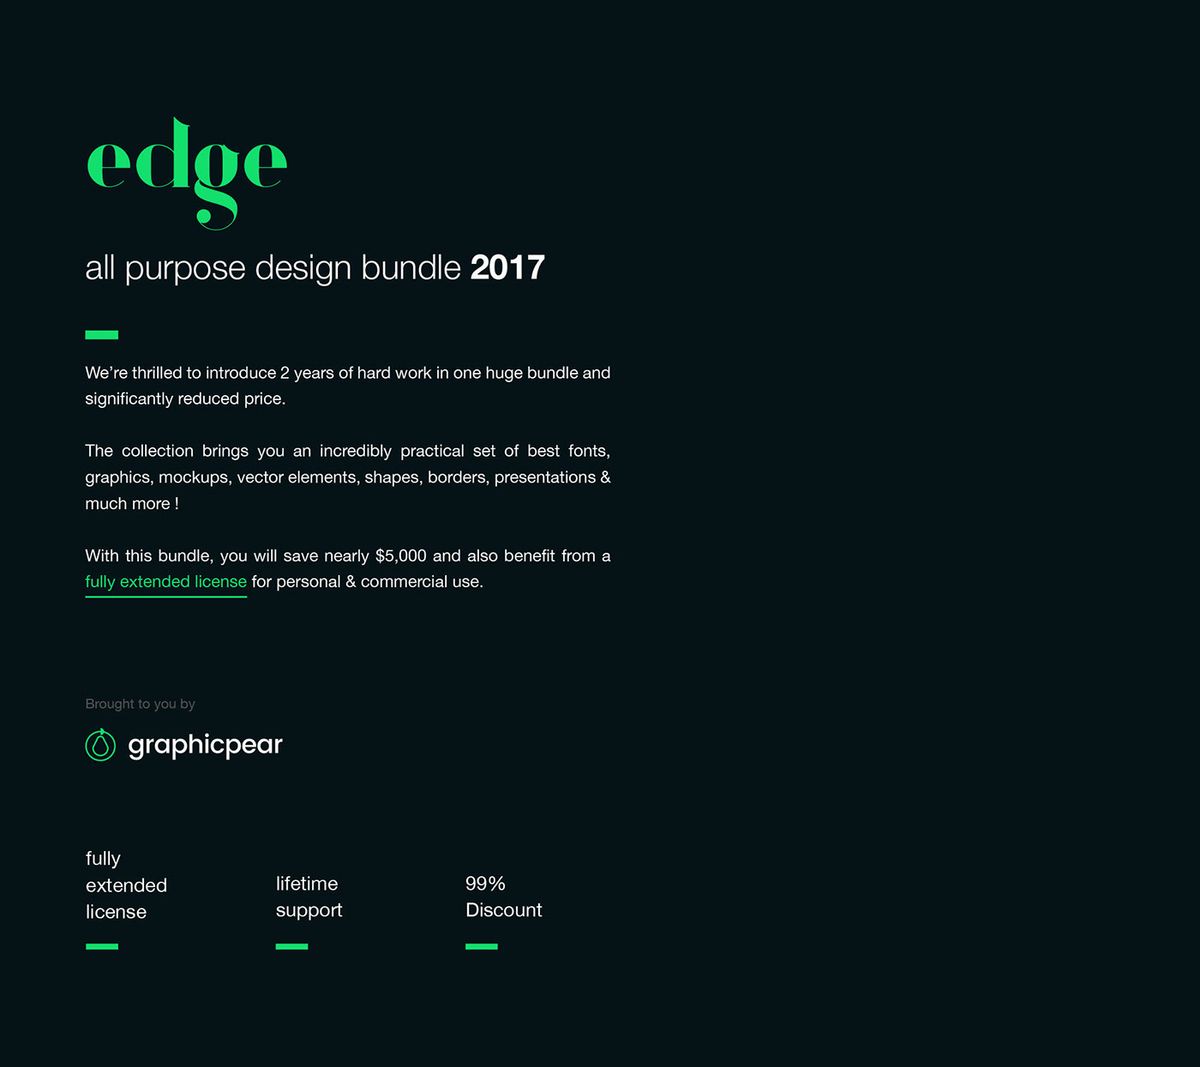 Edge - Ultimate Design Bundle on Behance